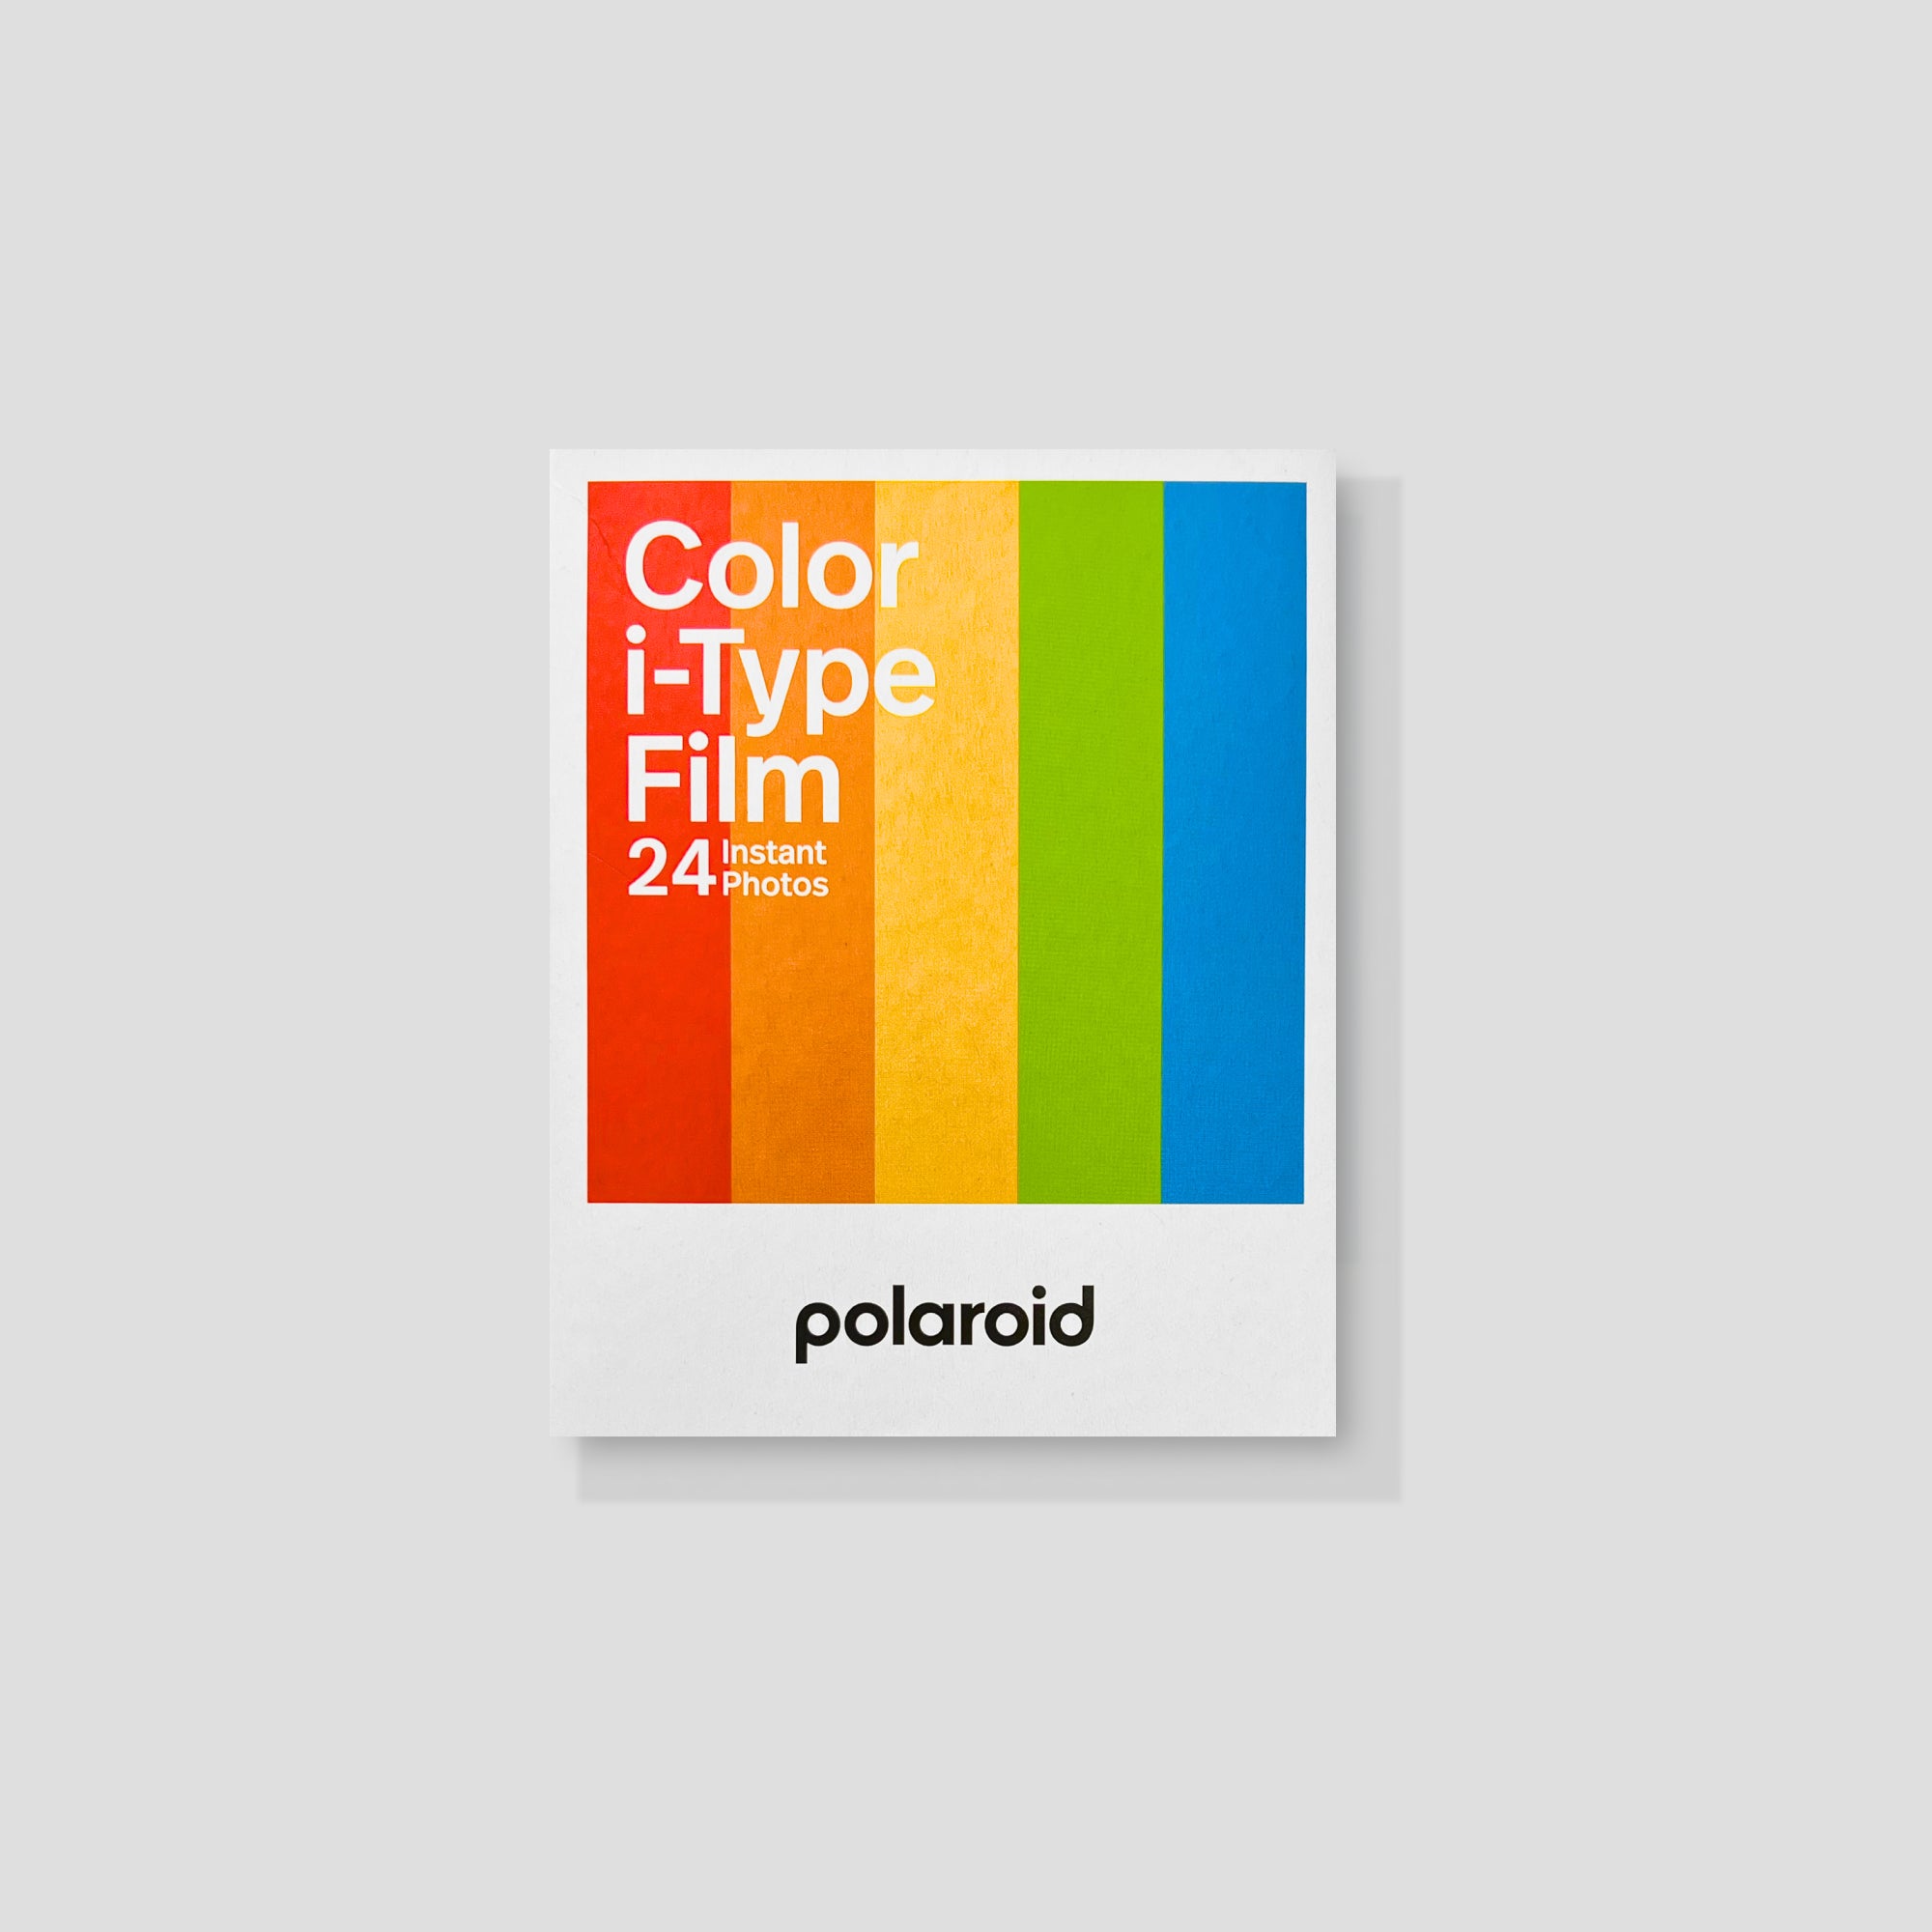 Polaroid Color i Type Film